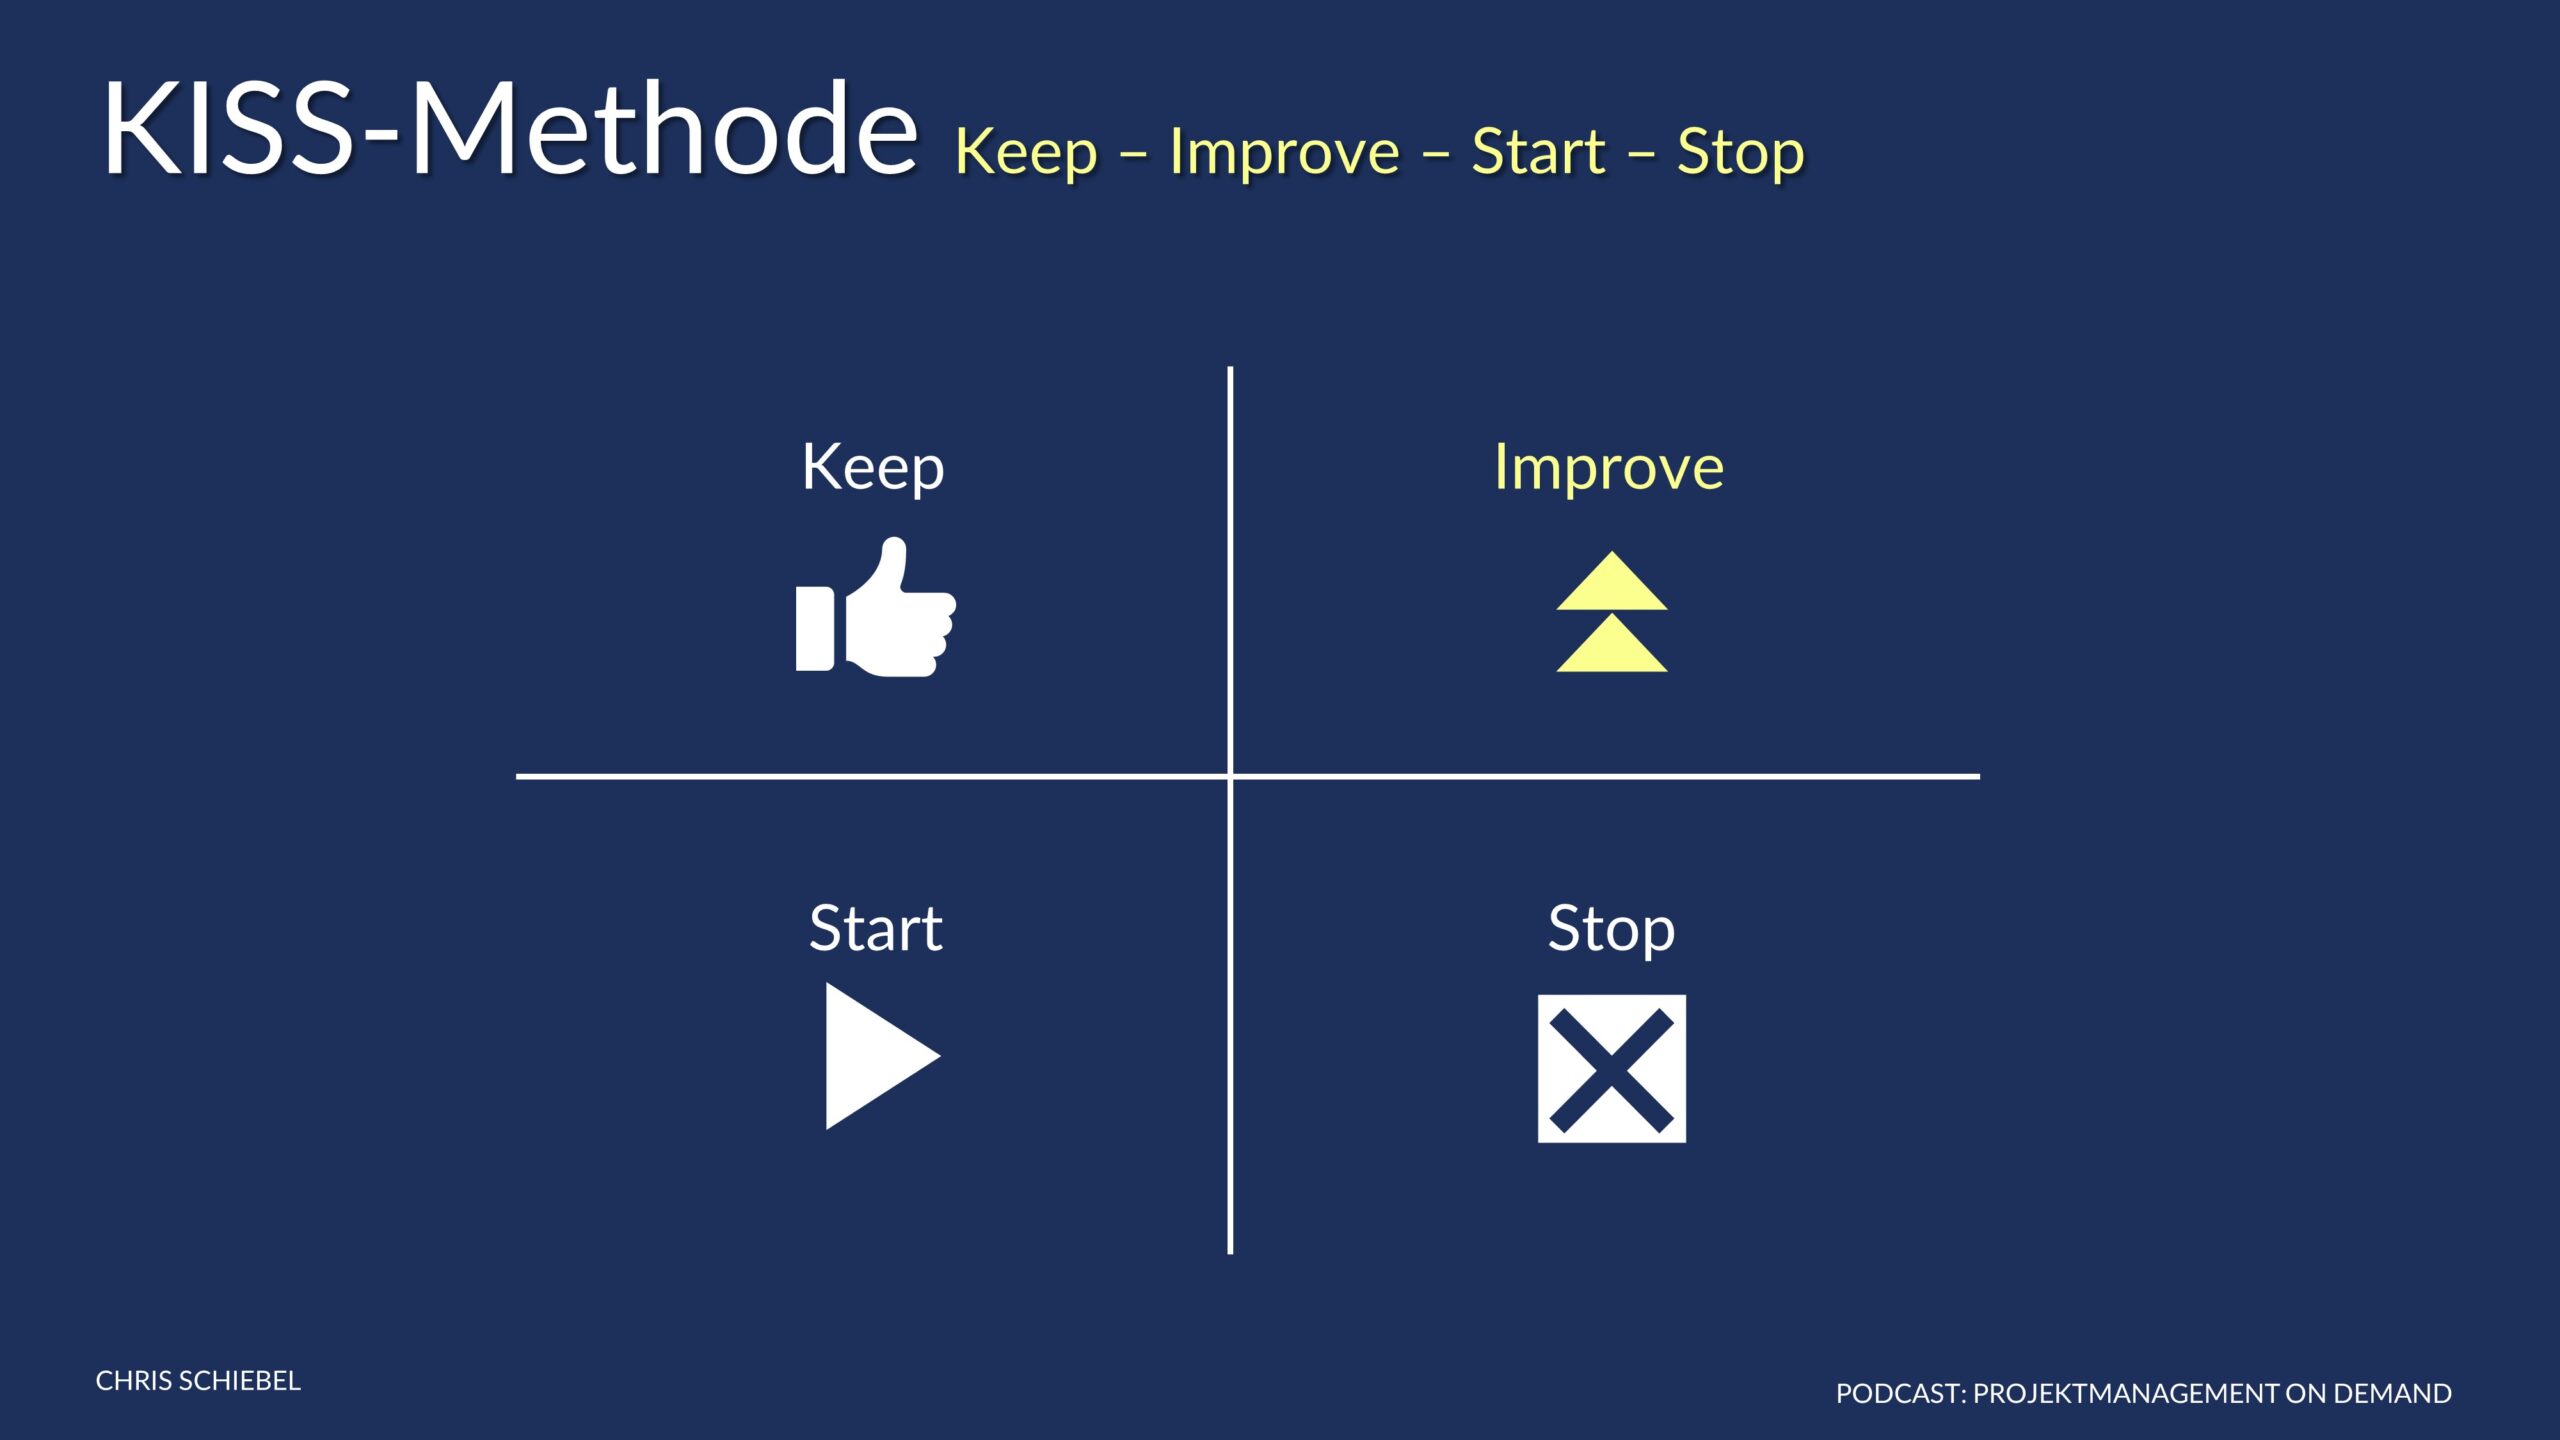 Kiss Methode - Keep, Improve, Start, Stop